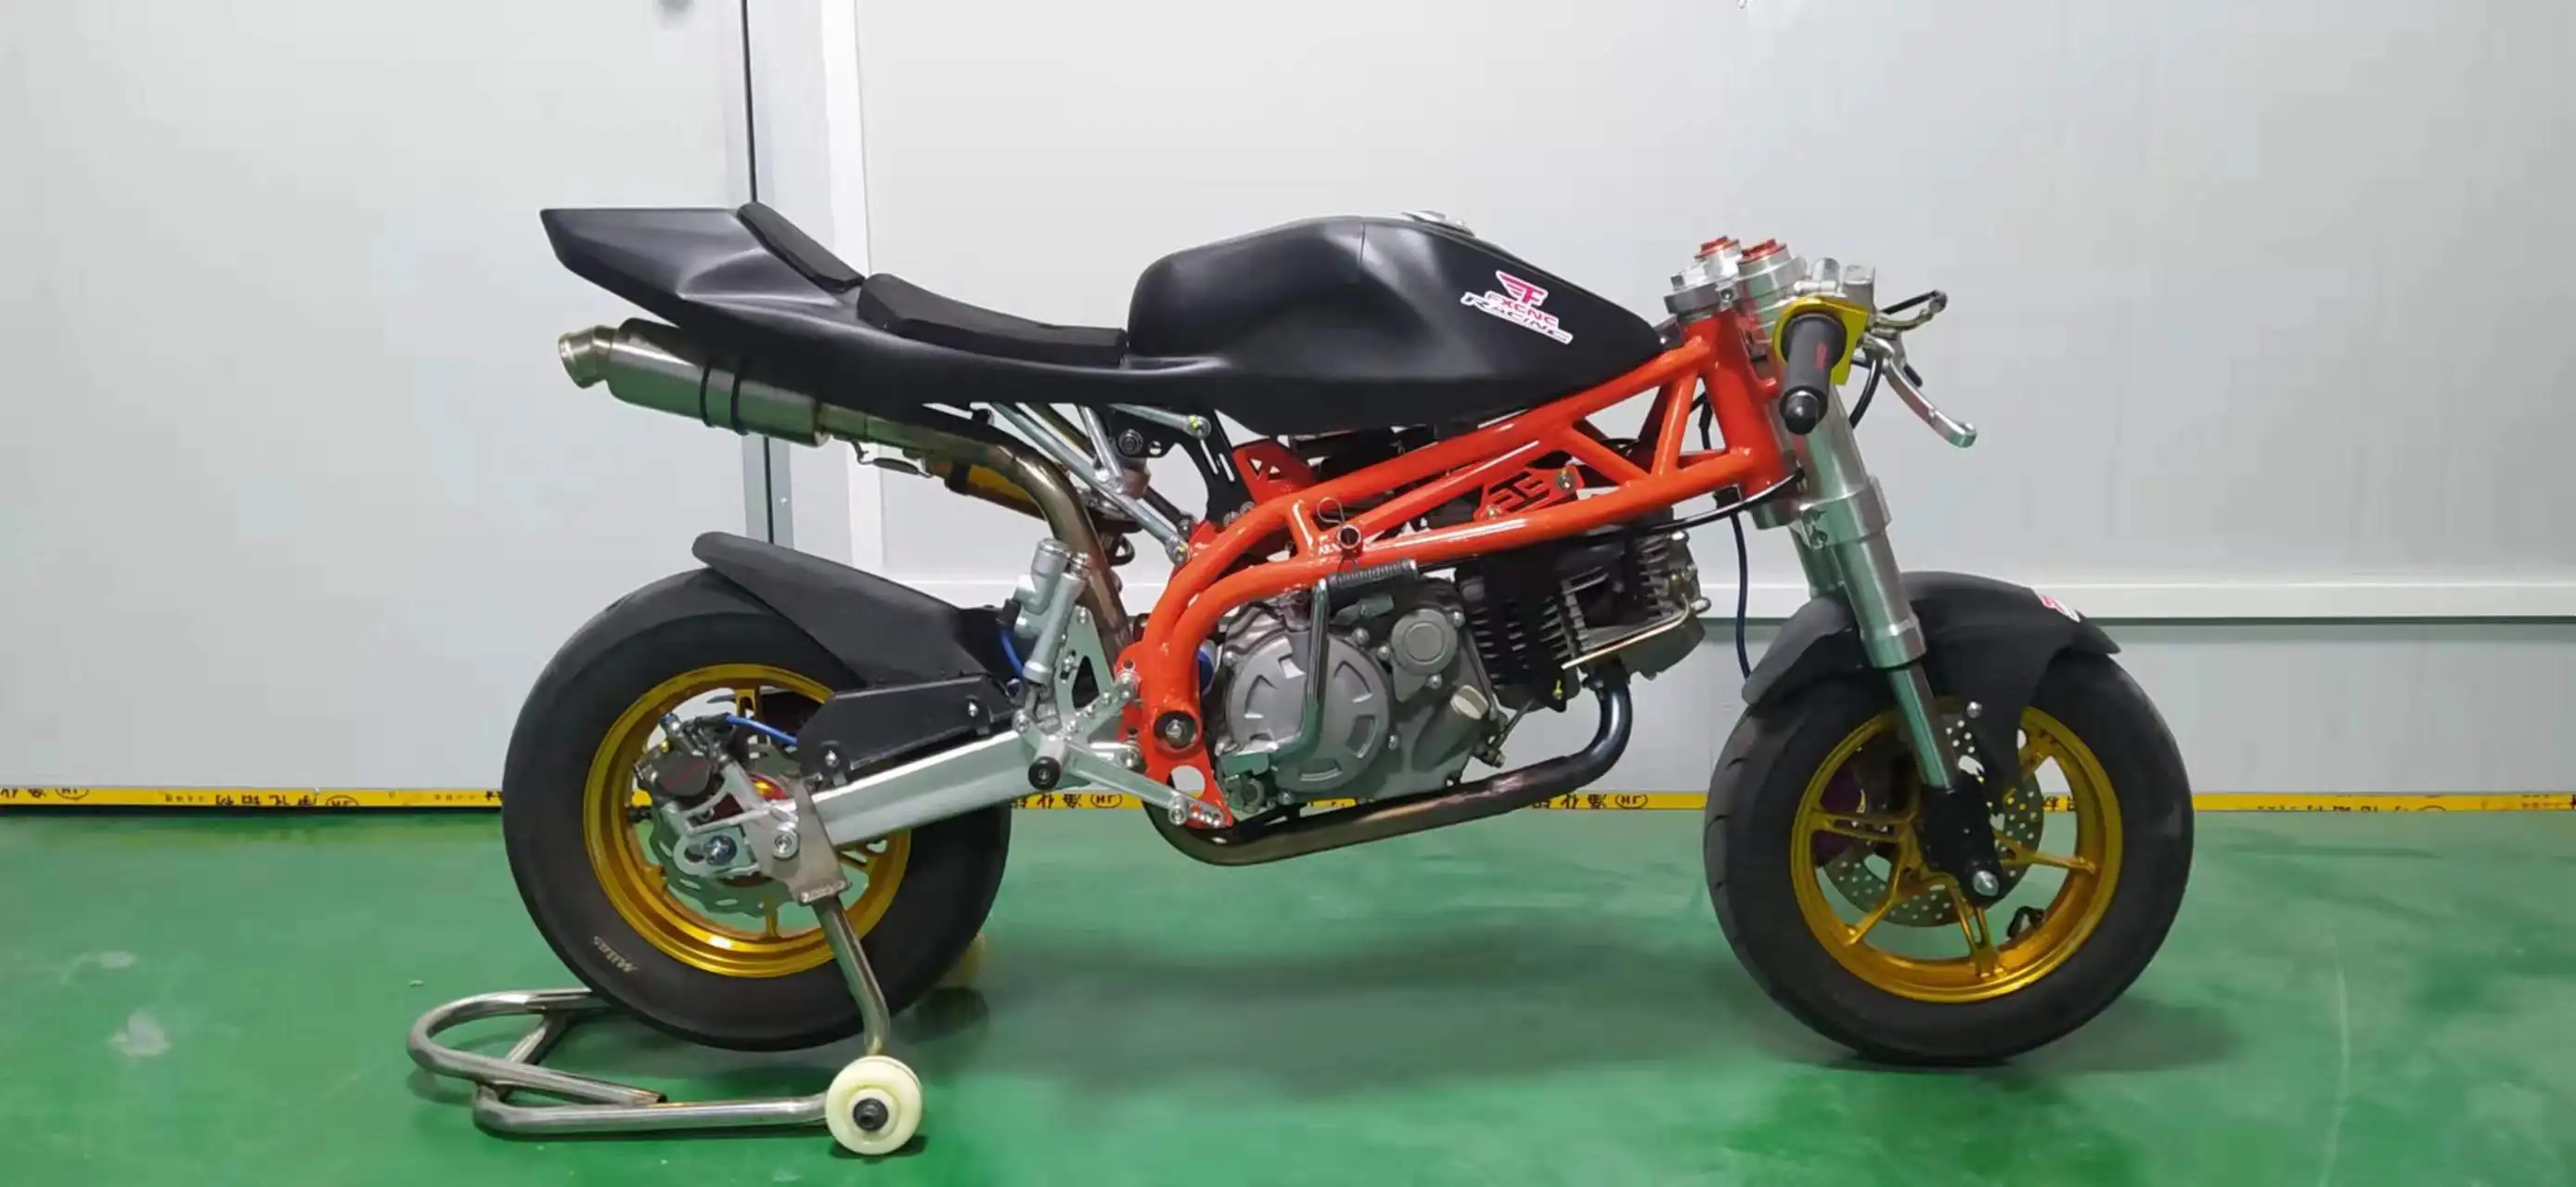 Motor completo 53cc UD Racing para mini motos - ORO, Motor minimotos,  Recambios minimotos, Descripcion 